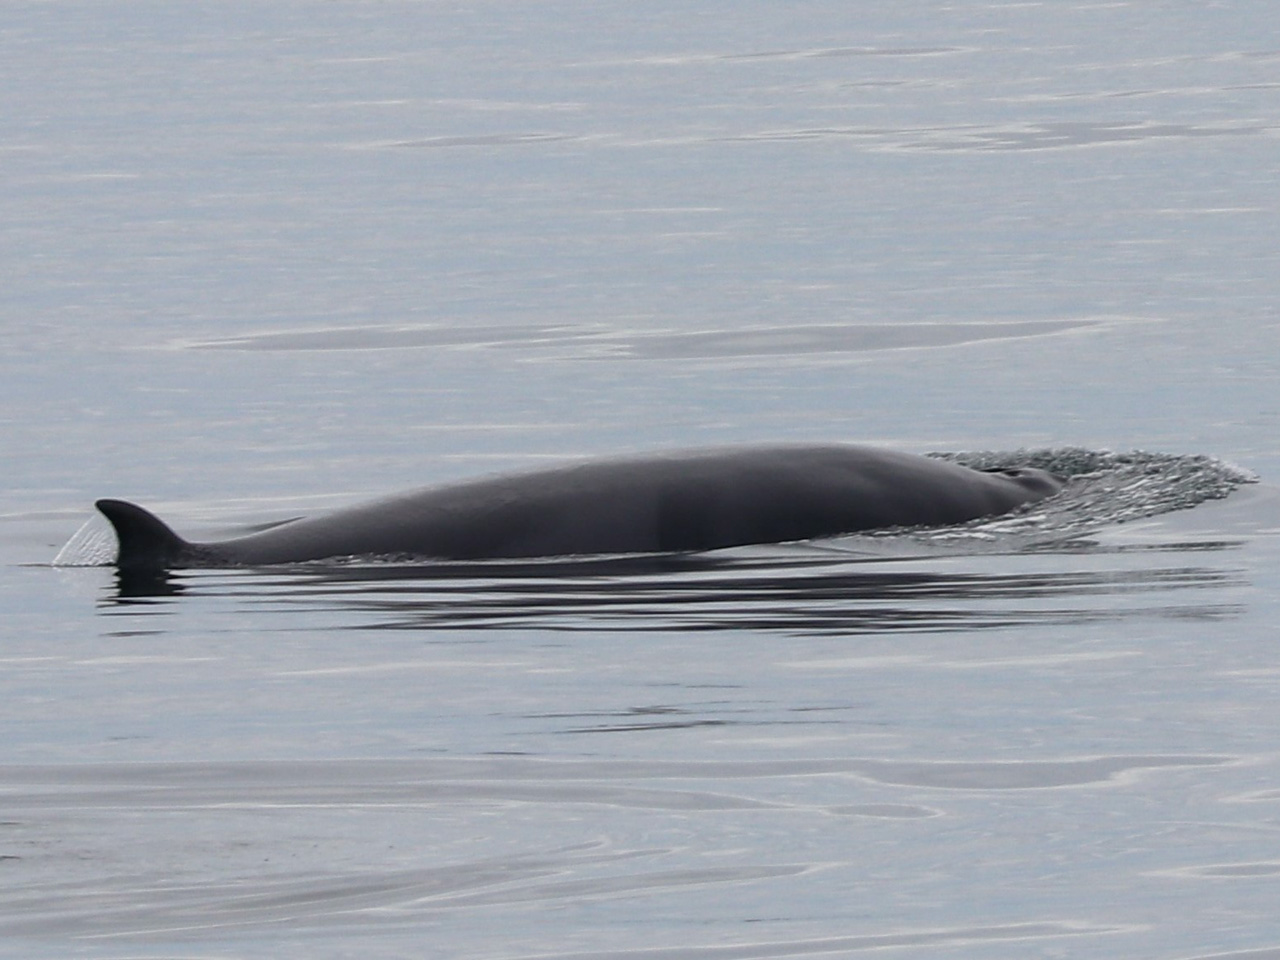 Minke whale: Back and dorsal fin surfacing